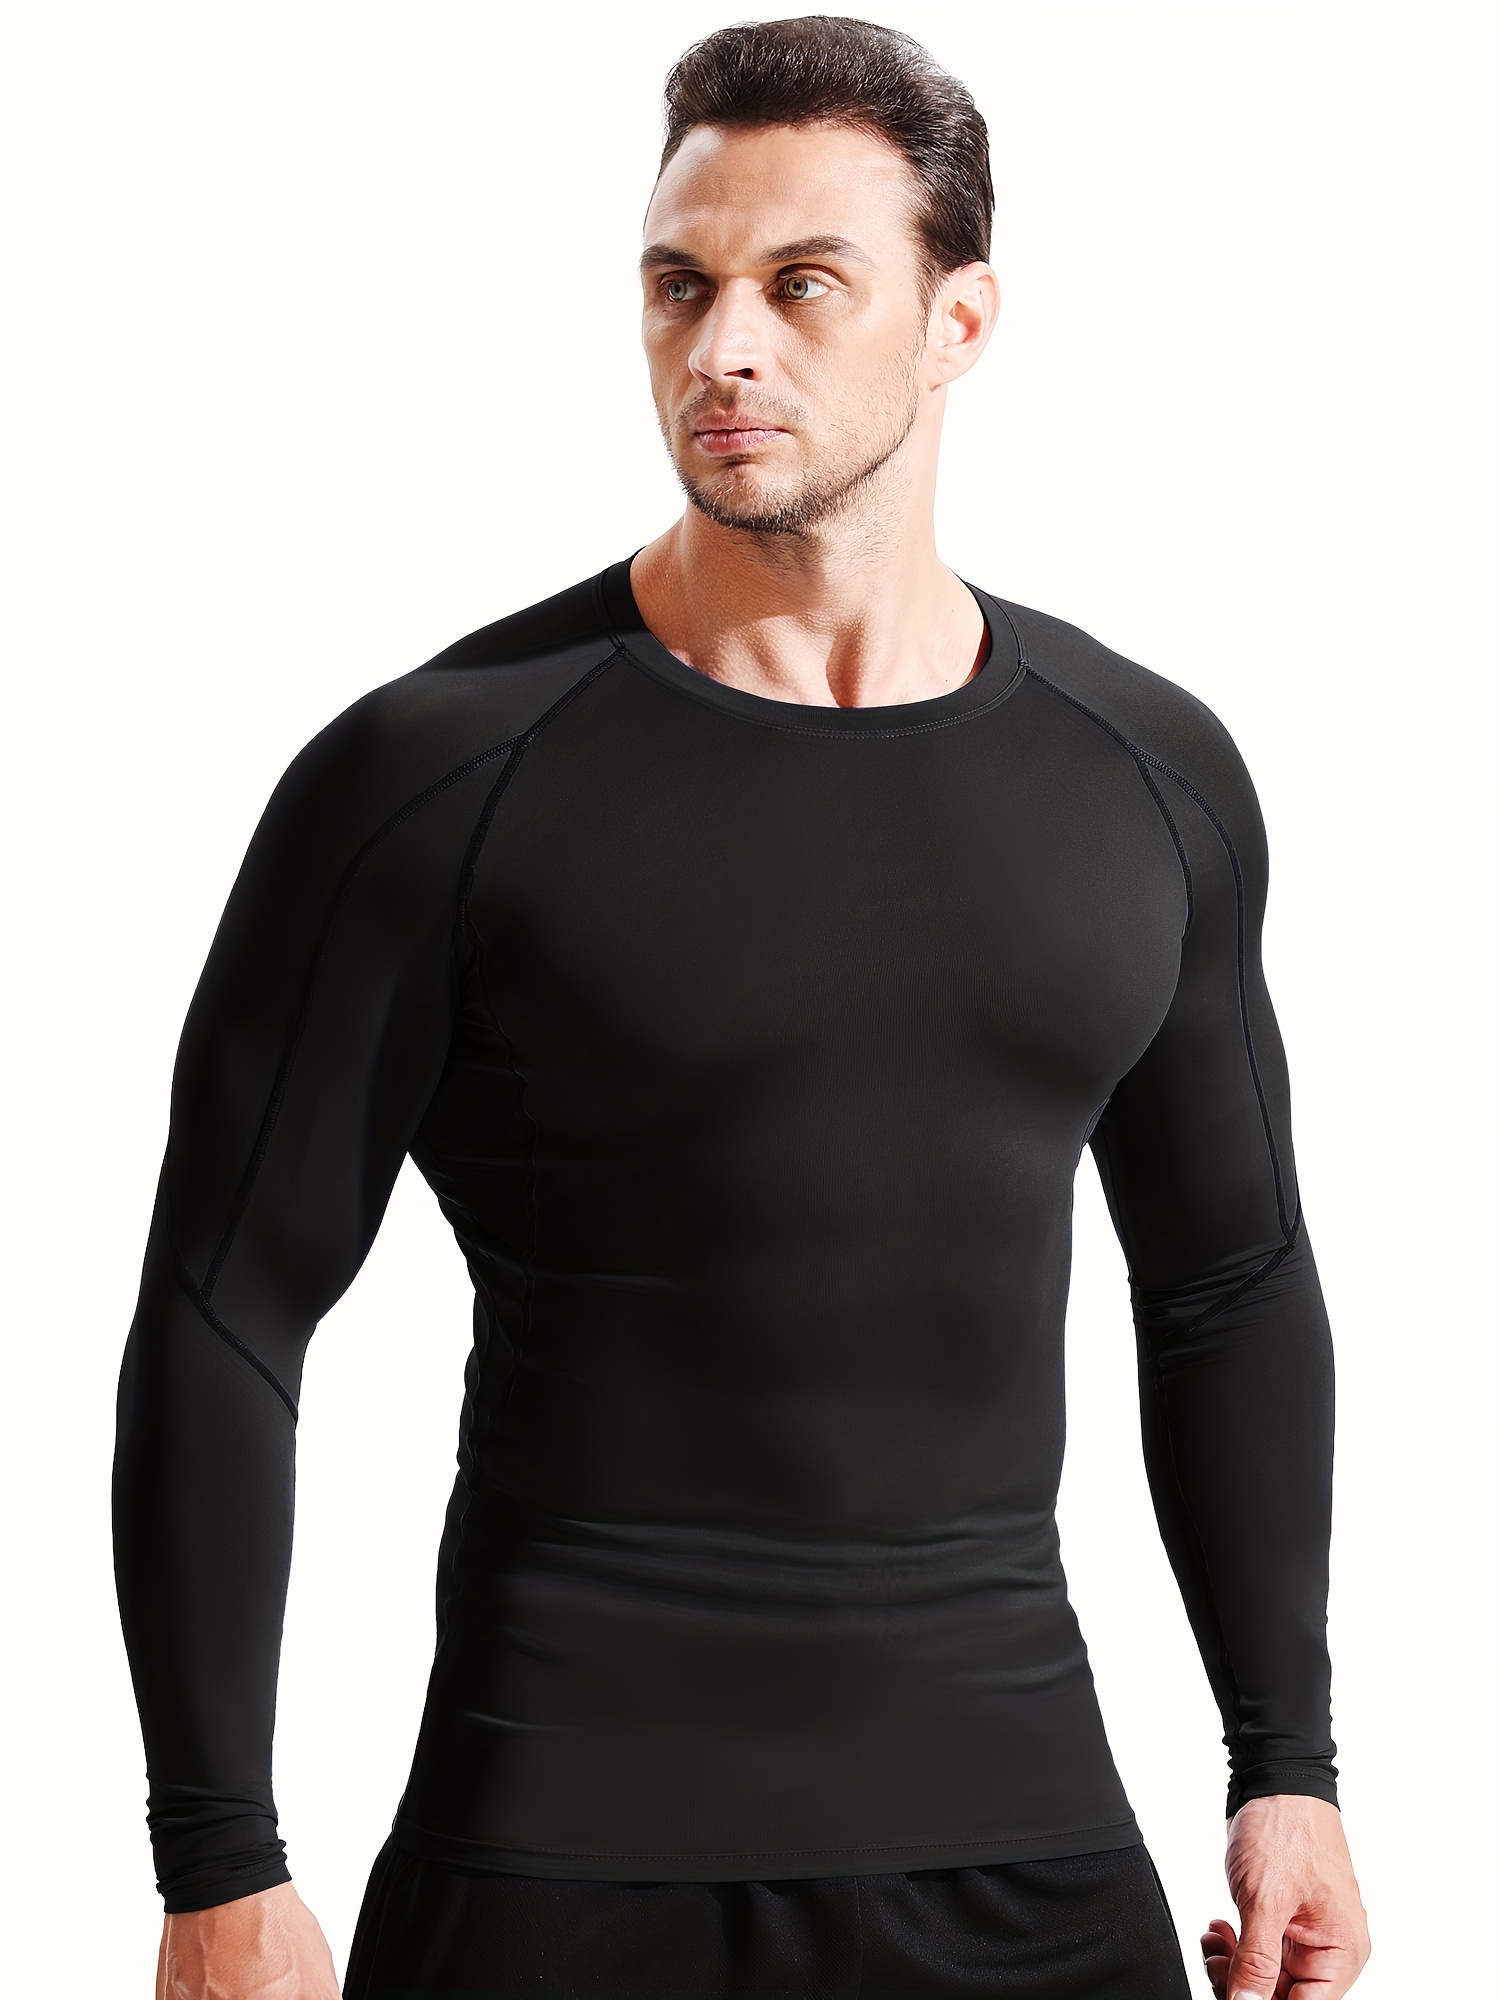  Black Compression Shirts For Men Athletic Long